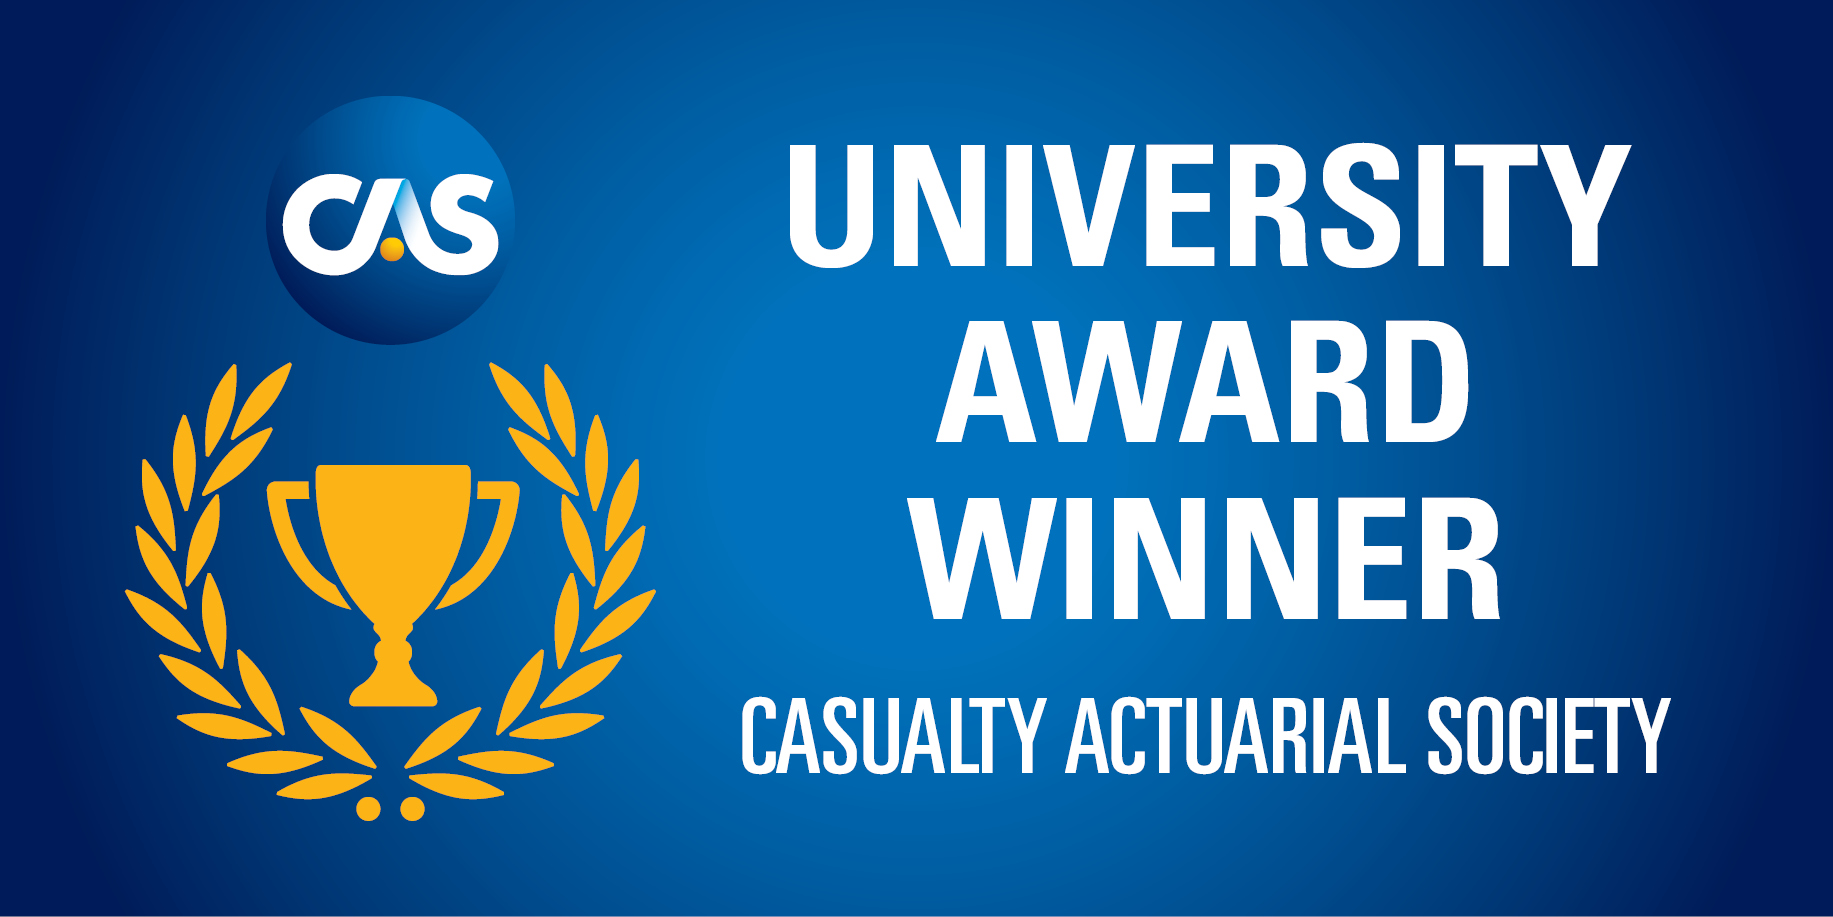 CAS University Award Winner